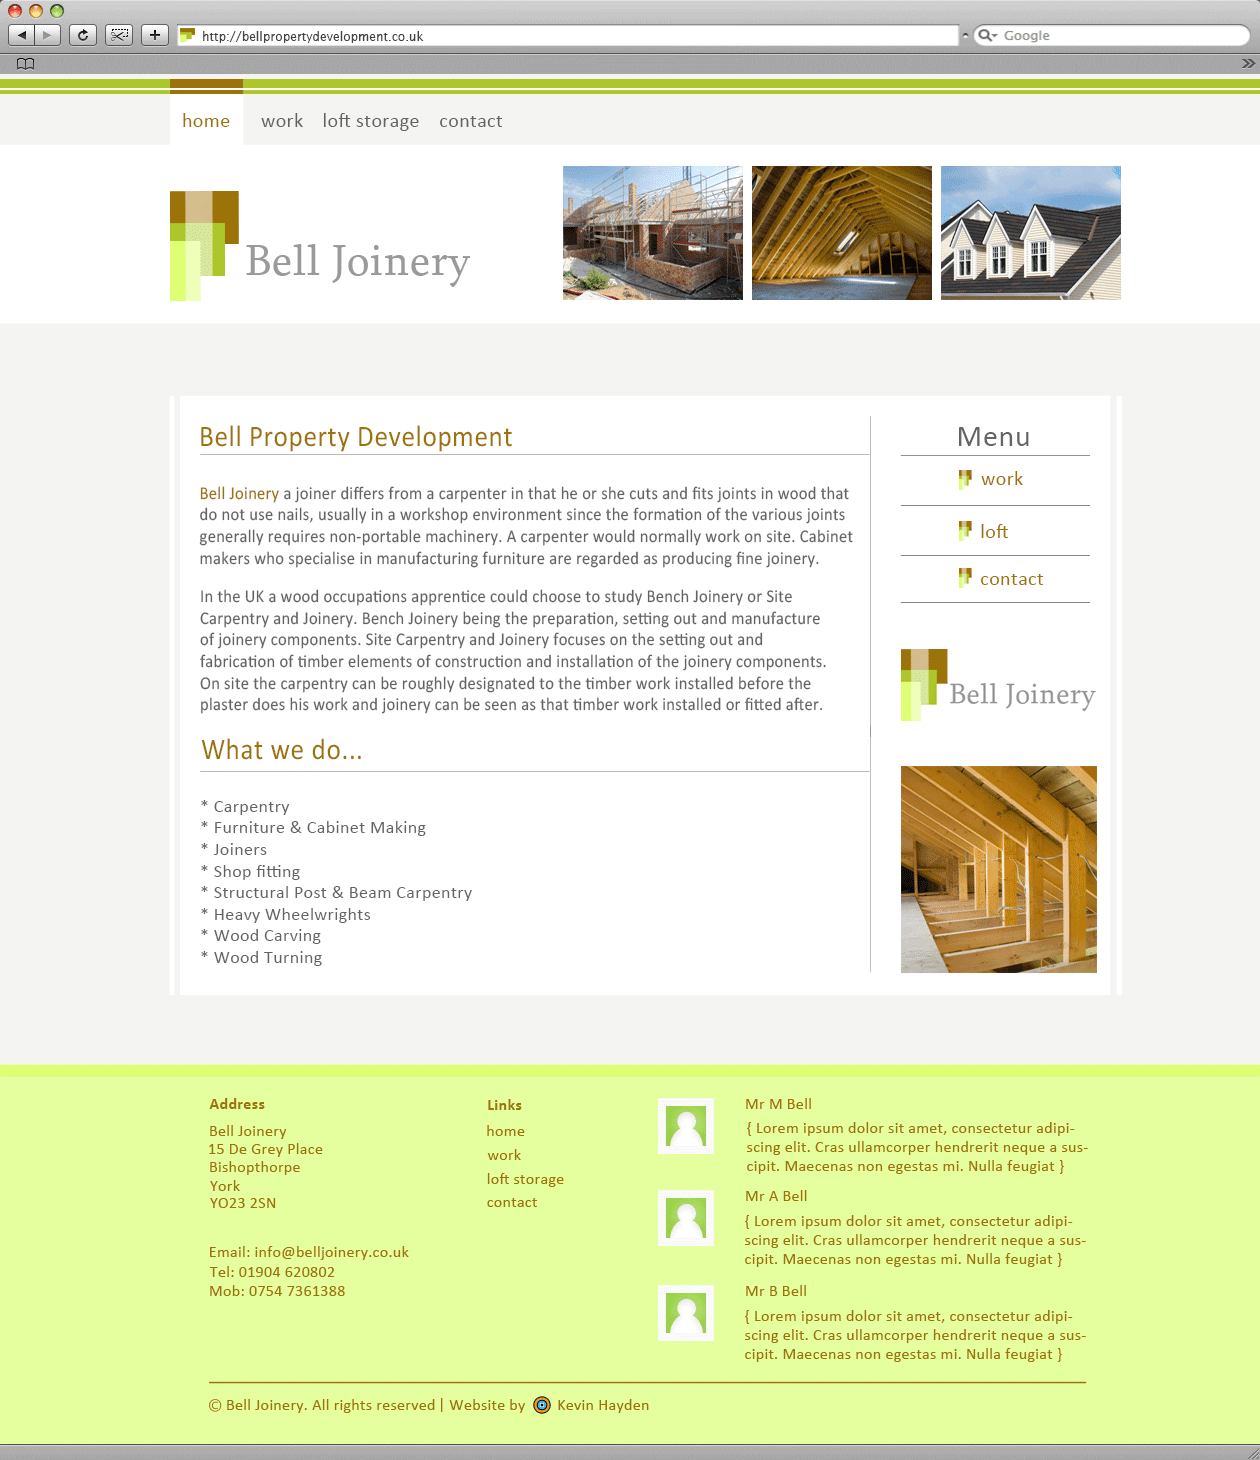 Bell Property Development website image.